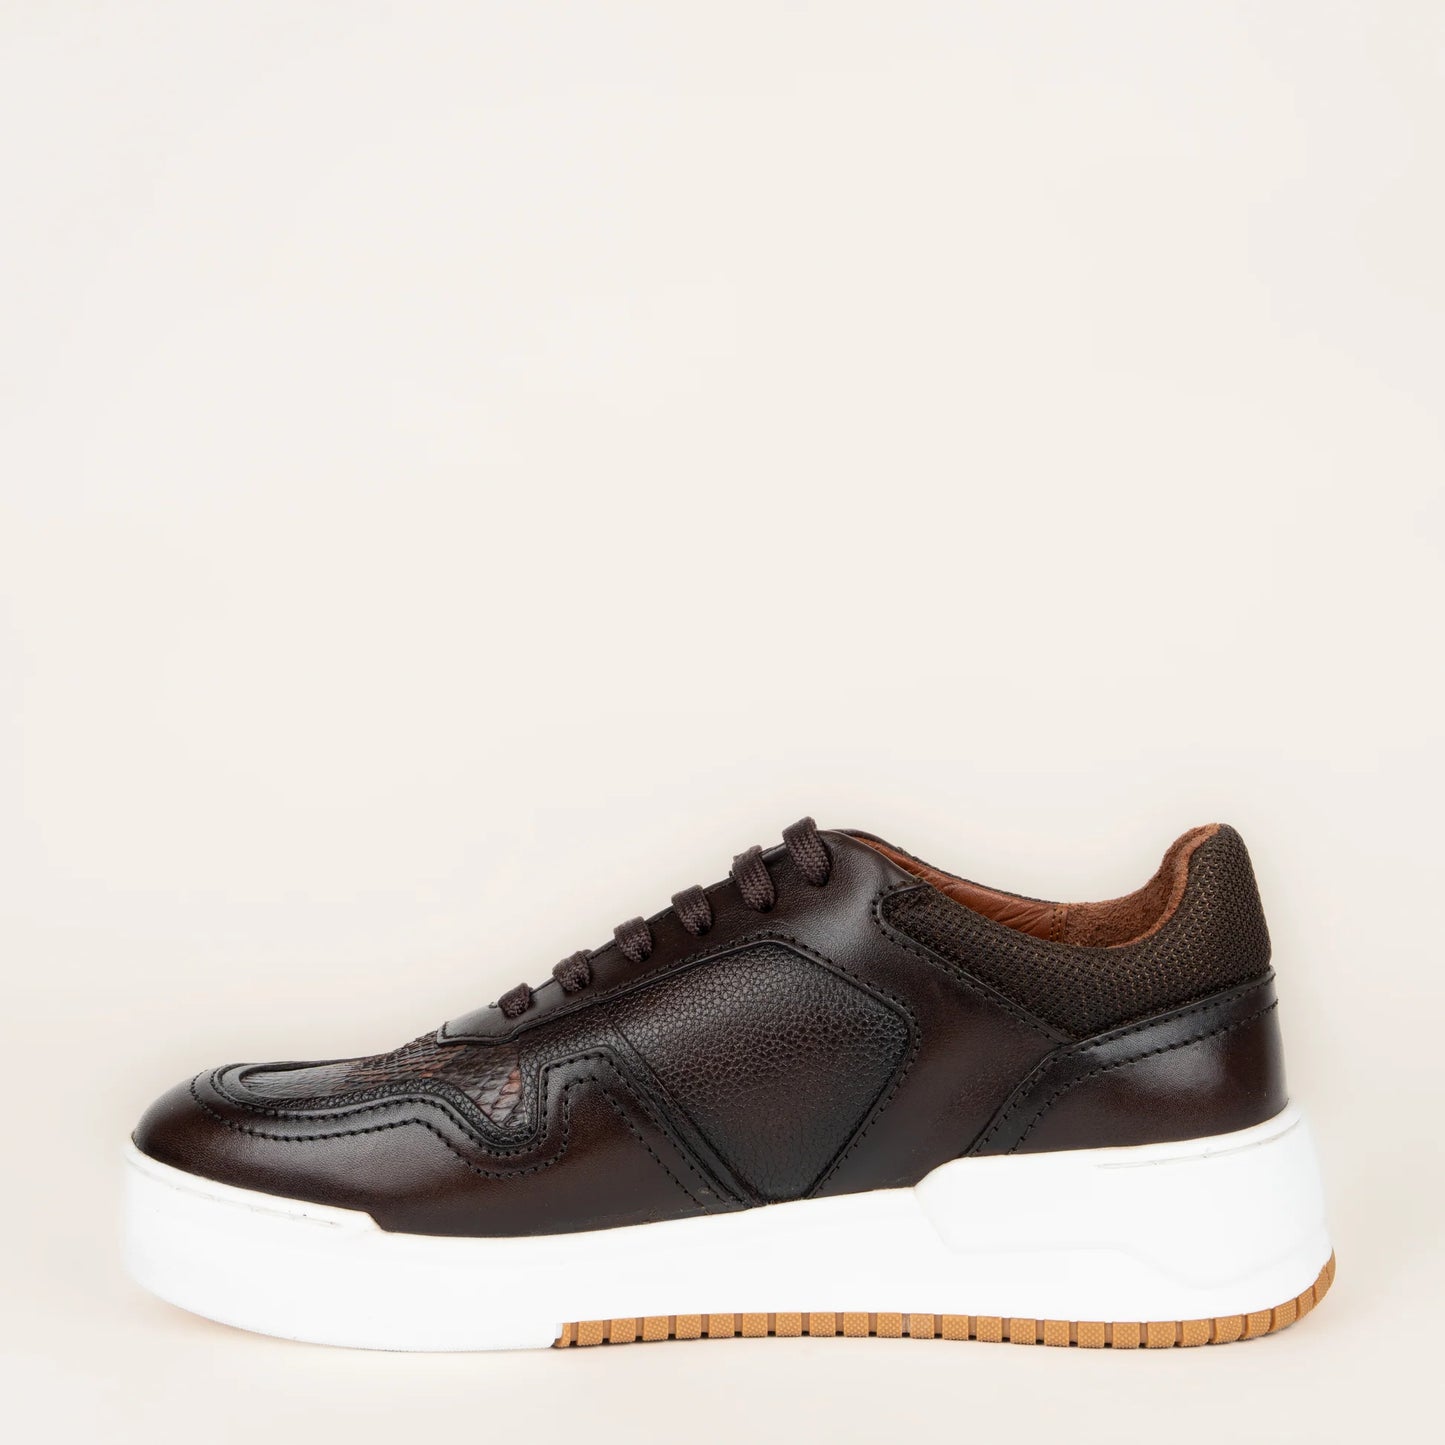 54QPBTS - Cuadra chocolate casual fashion python skin sneakers for men